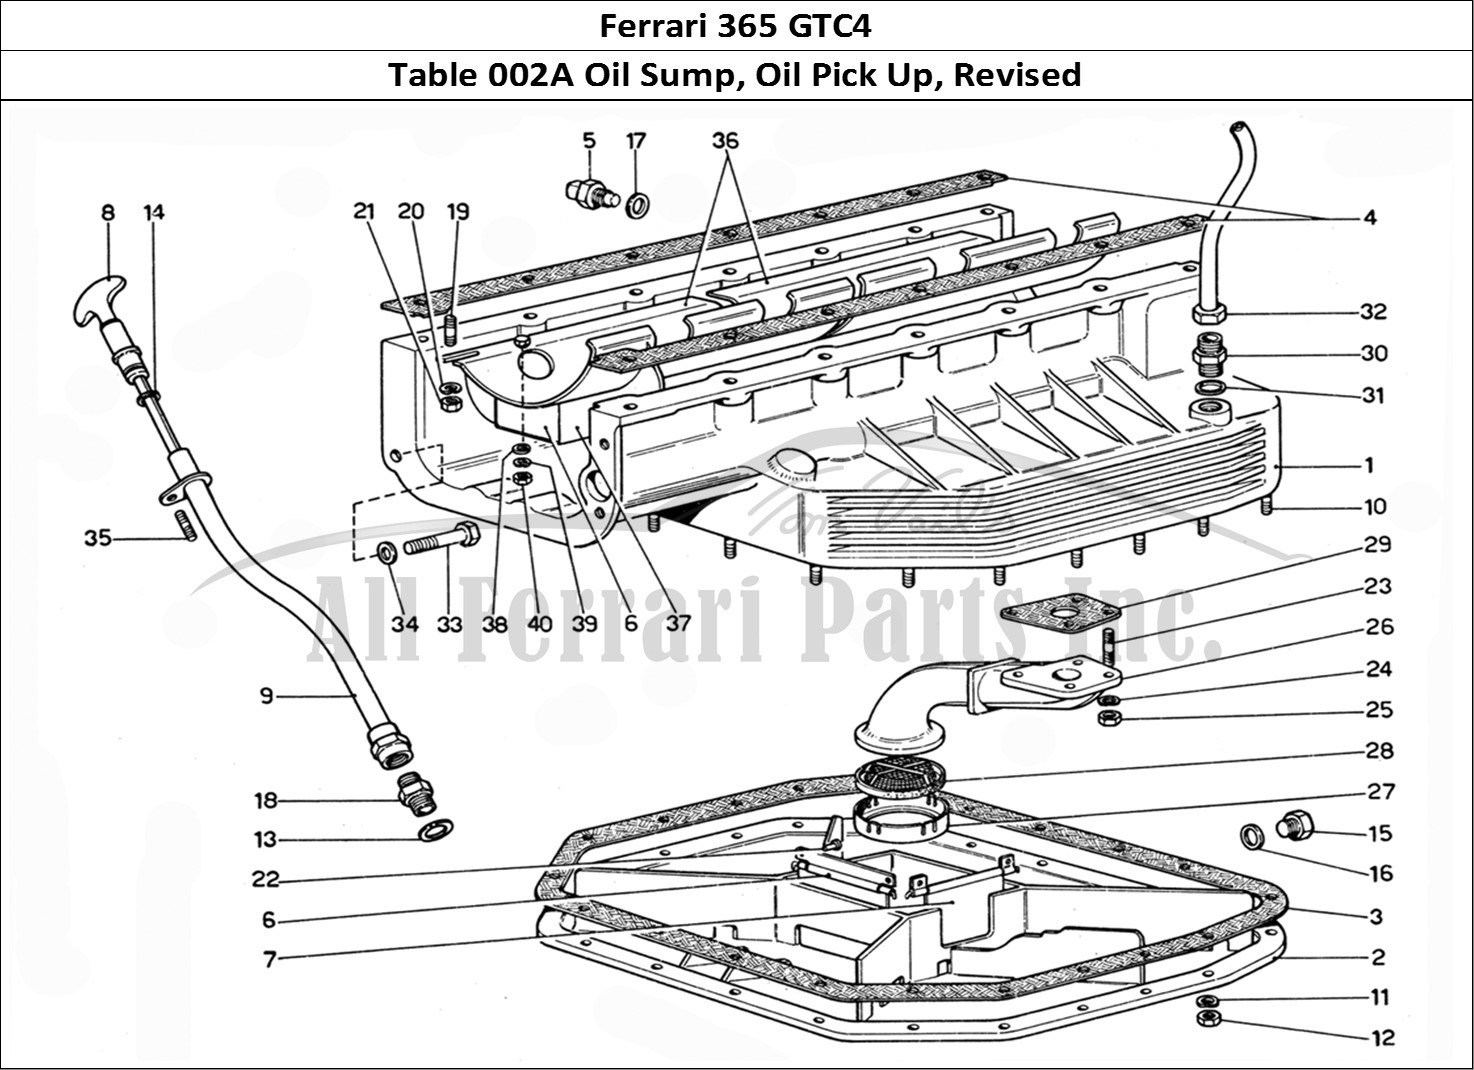 Ferrari Parts Ferrari 365 GTC4 (Mechanical) Page 002 Sump pan - Oil pick up -